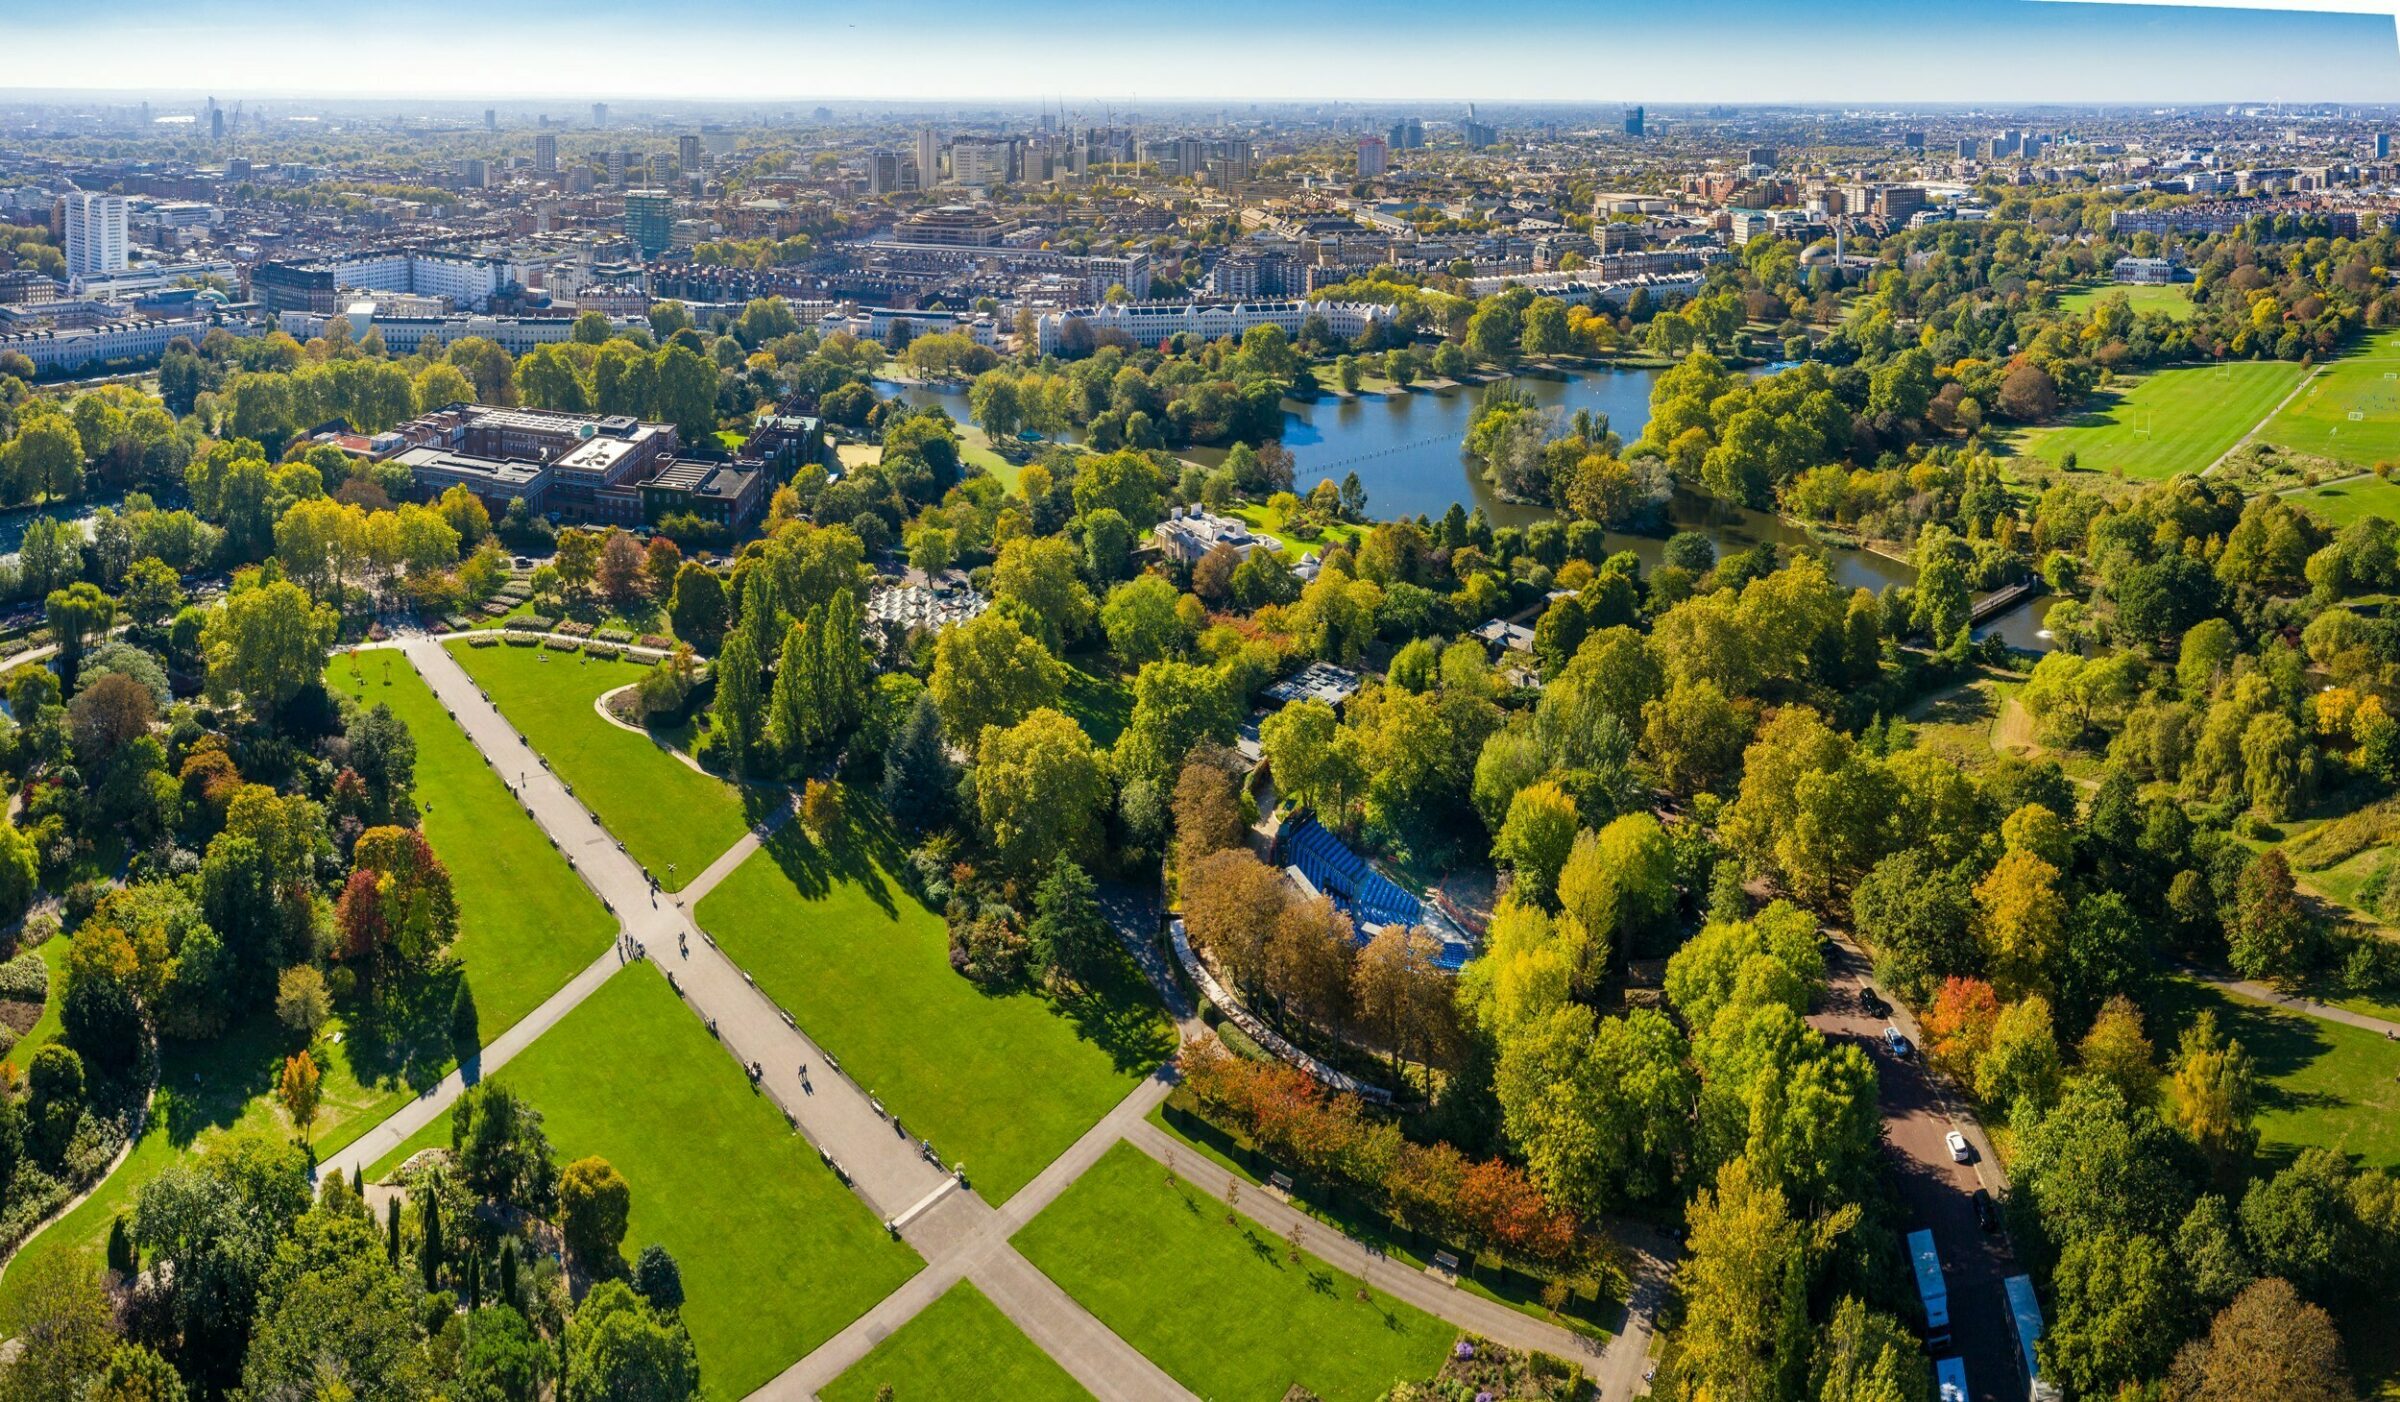 The Regents Park Aerial View